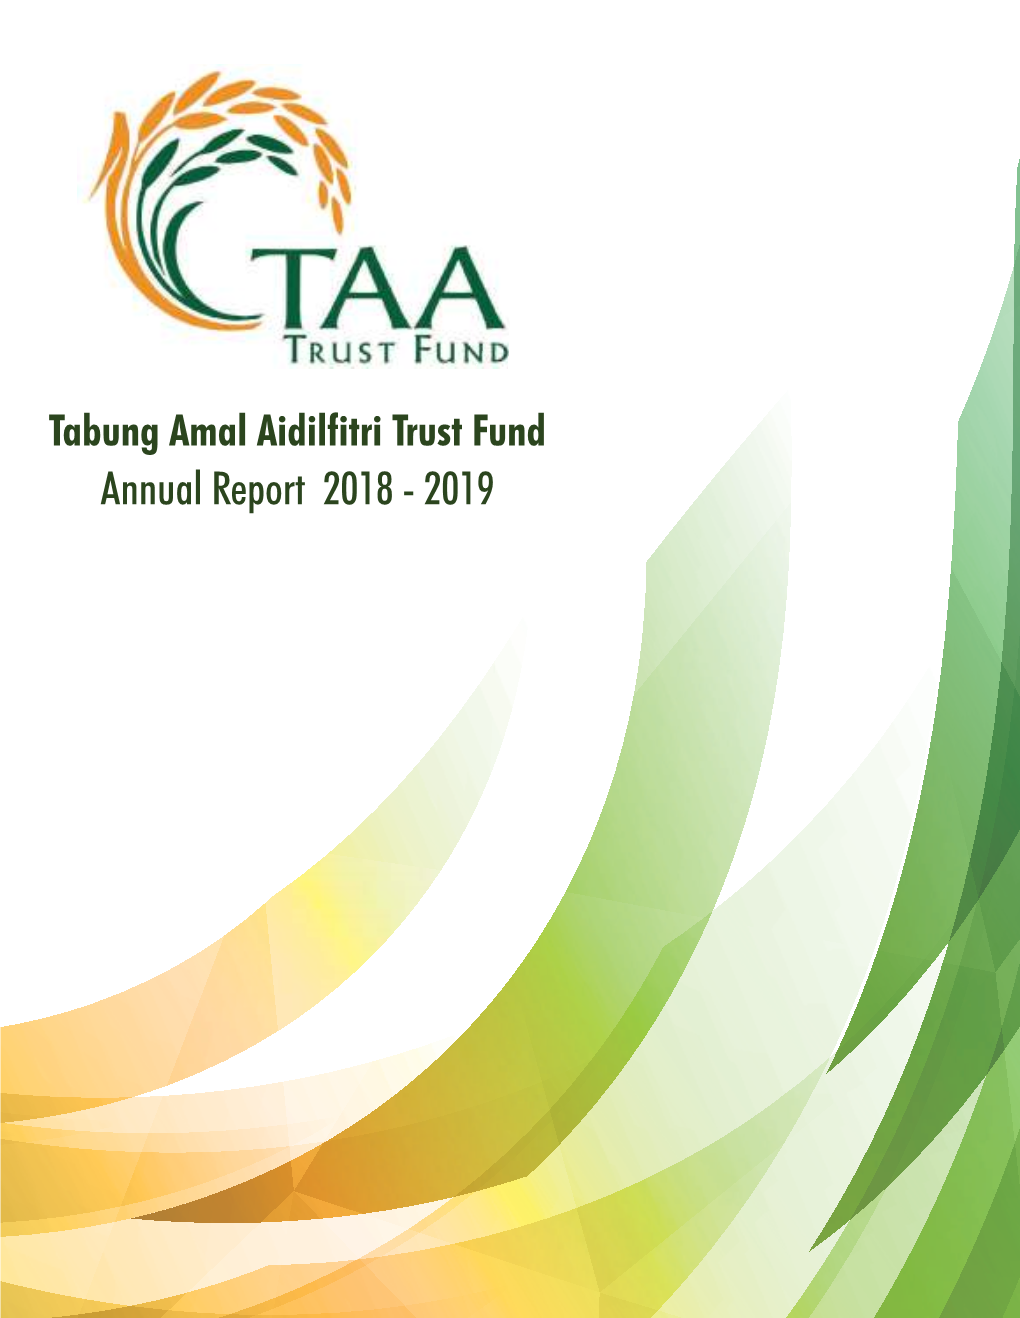 Annual Report 2018 - 2019 TAA TRUST FUND (TABUNG AMAL AIDILFITRI)